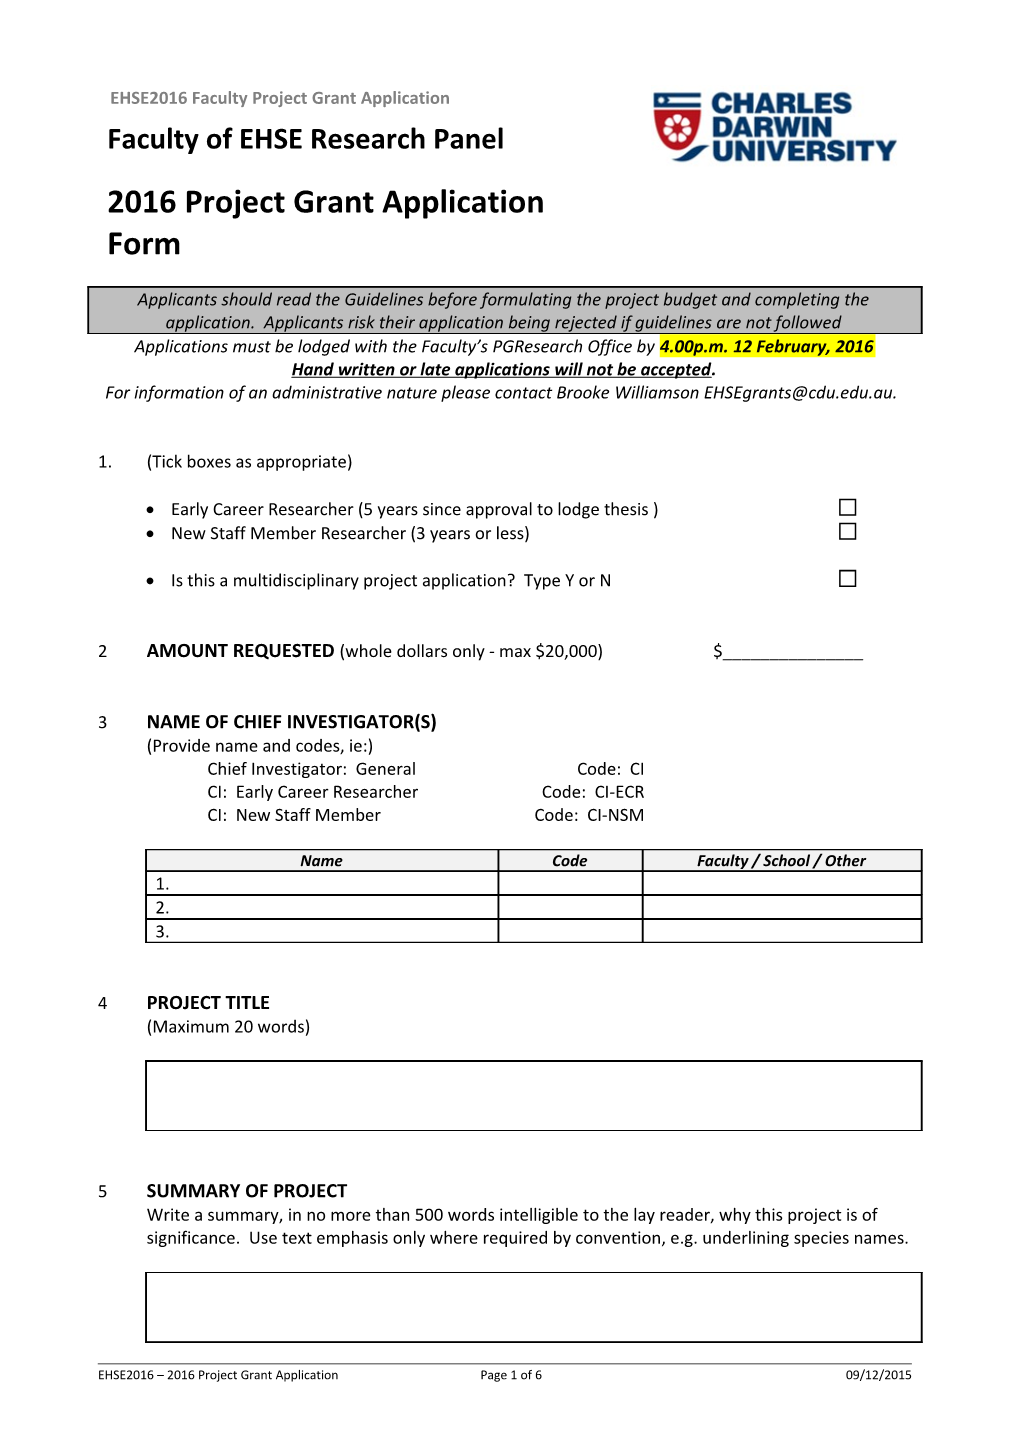 EHS115 UTROP Student Application Form